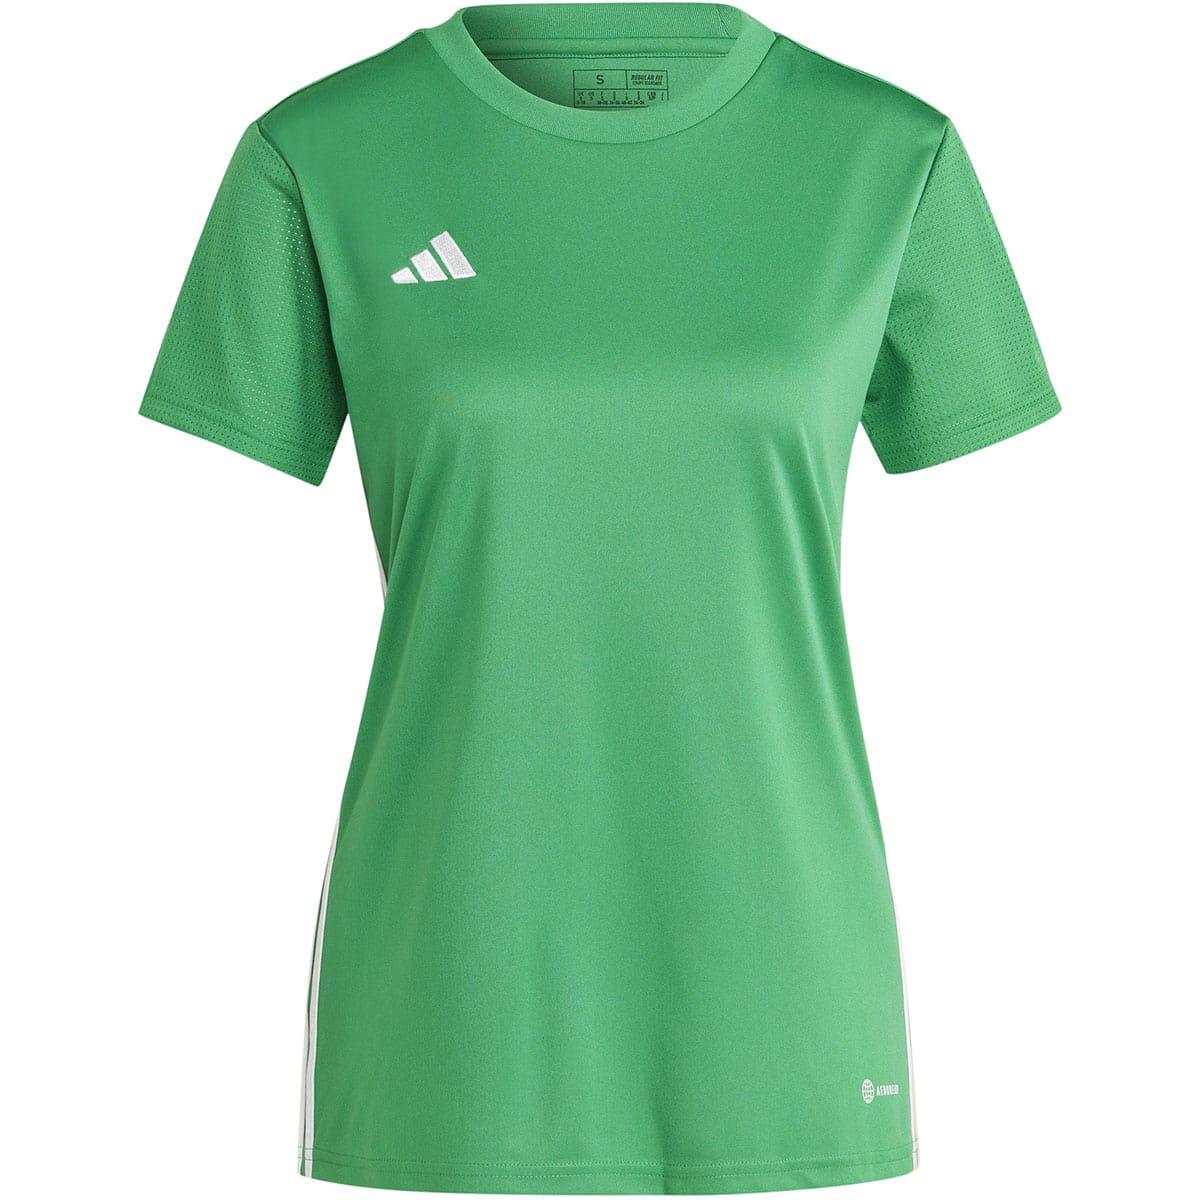 Adidas Damen Trikot Tabela 23 grün-weiß